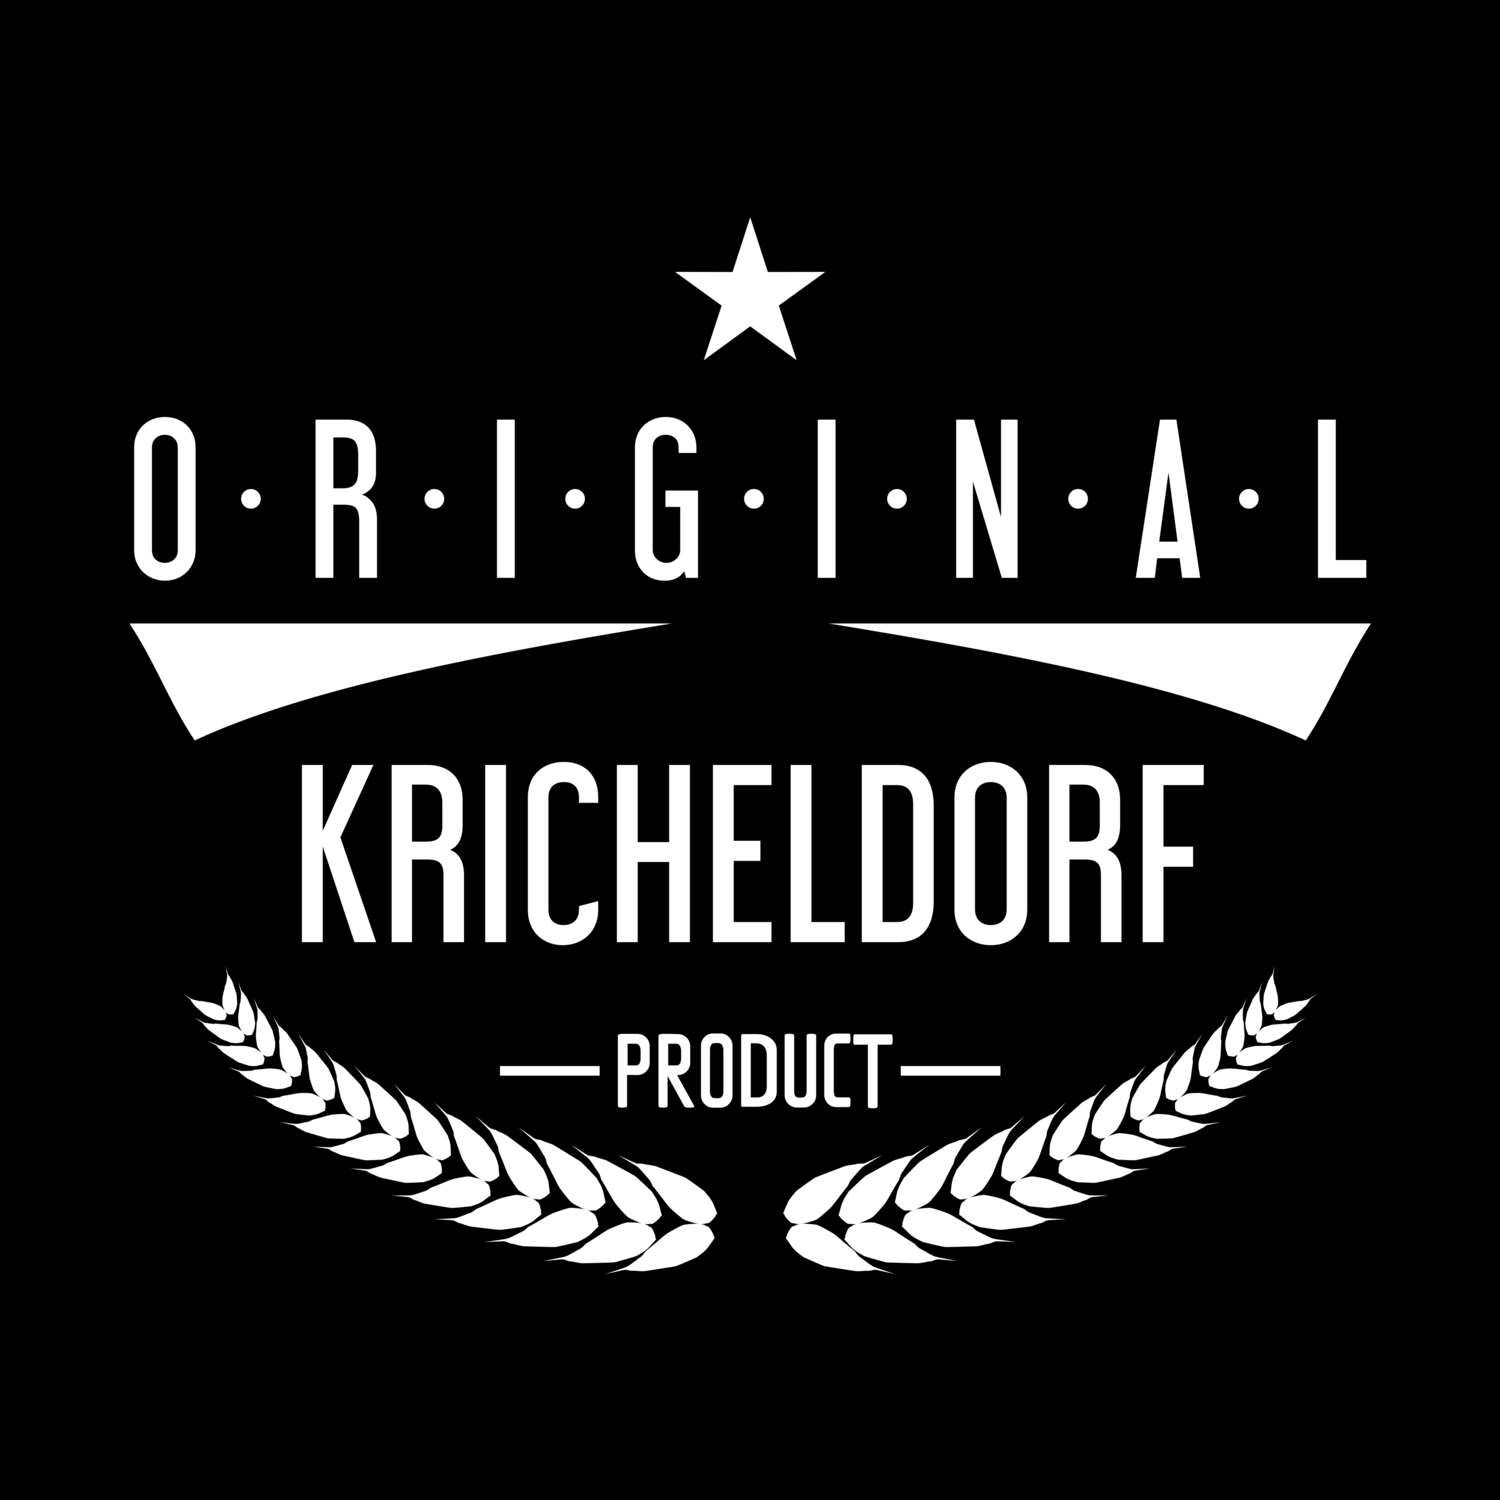 Kricheldorf T-Shirt »Original Product«